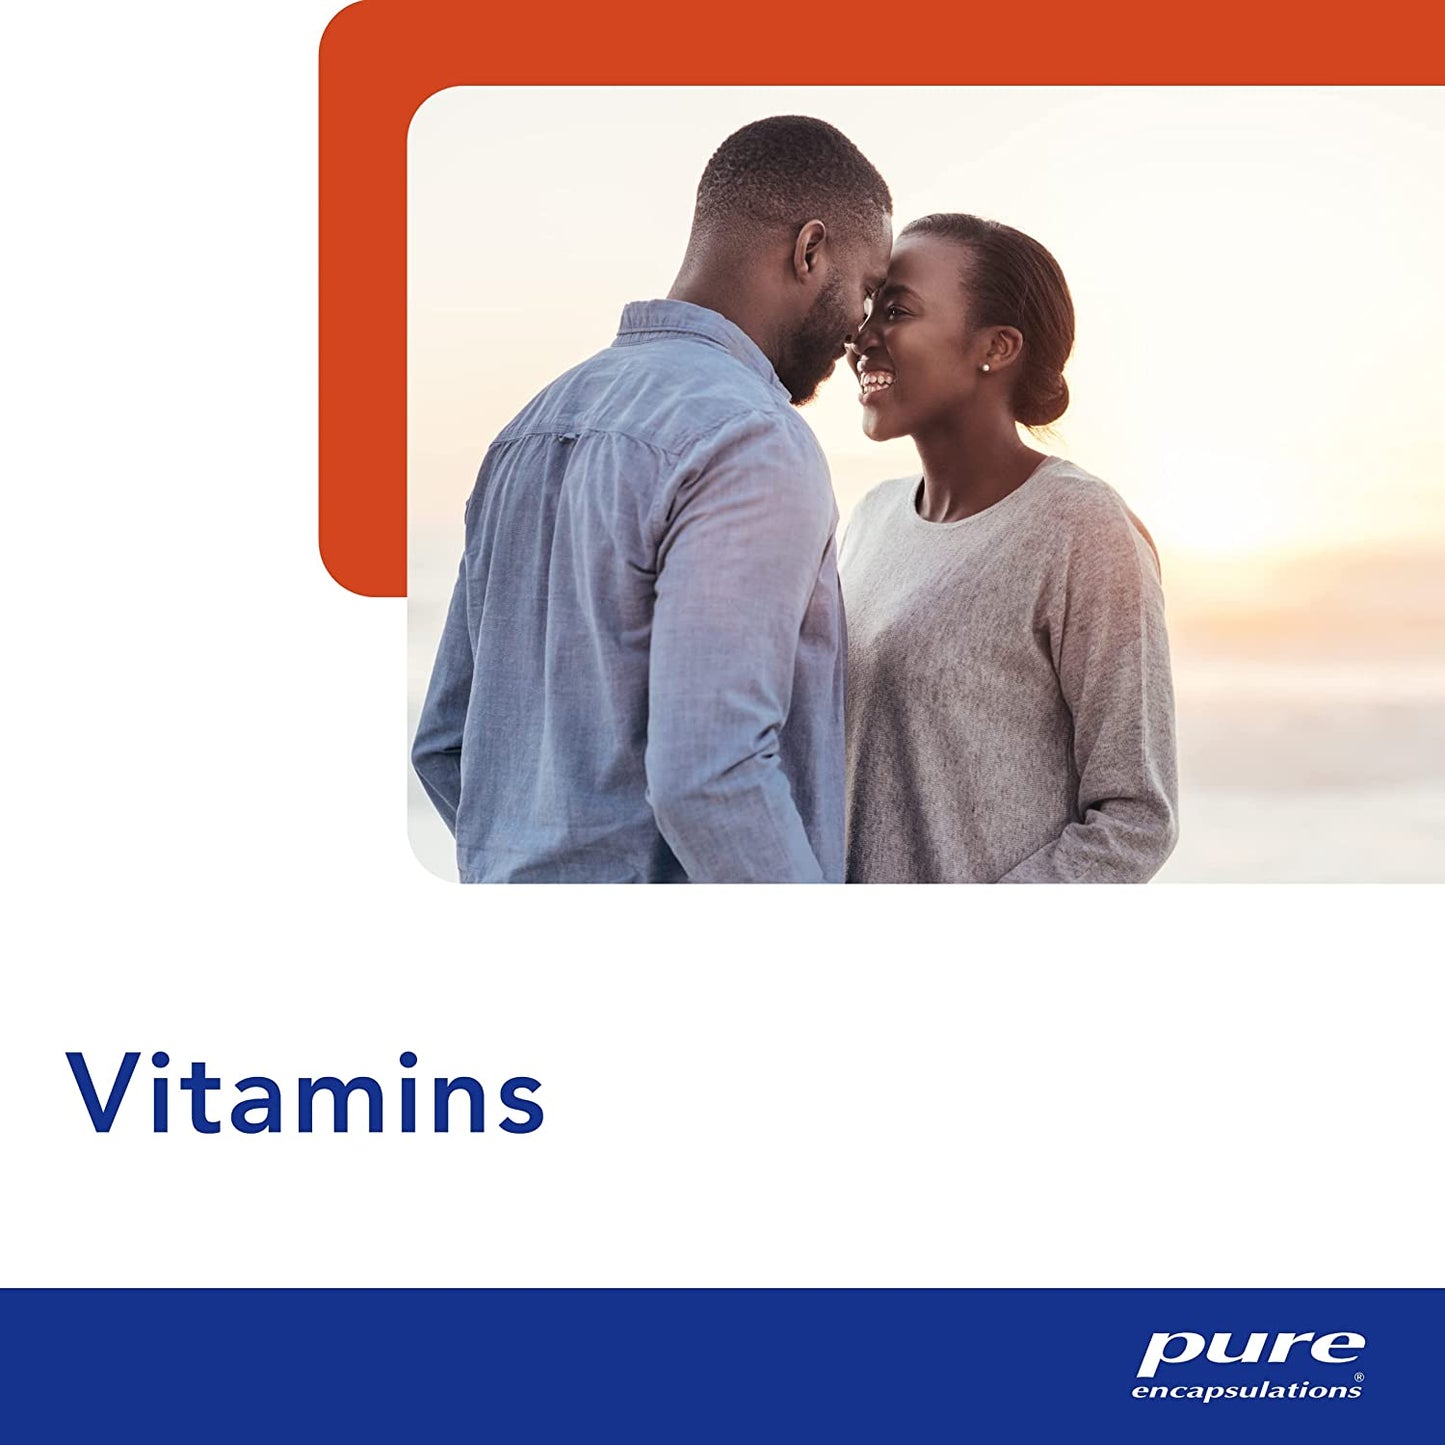 Vitamin D3 25 Mcg (1,000 IU) - Supplement to Support Bone, Joint, Breast, Heart, Colon & Immune Health - with Premium Vitamin D - 120 Capsules